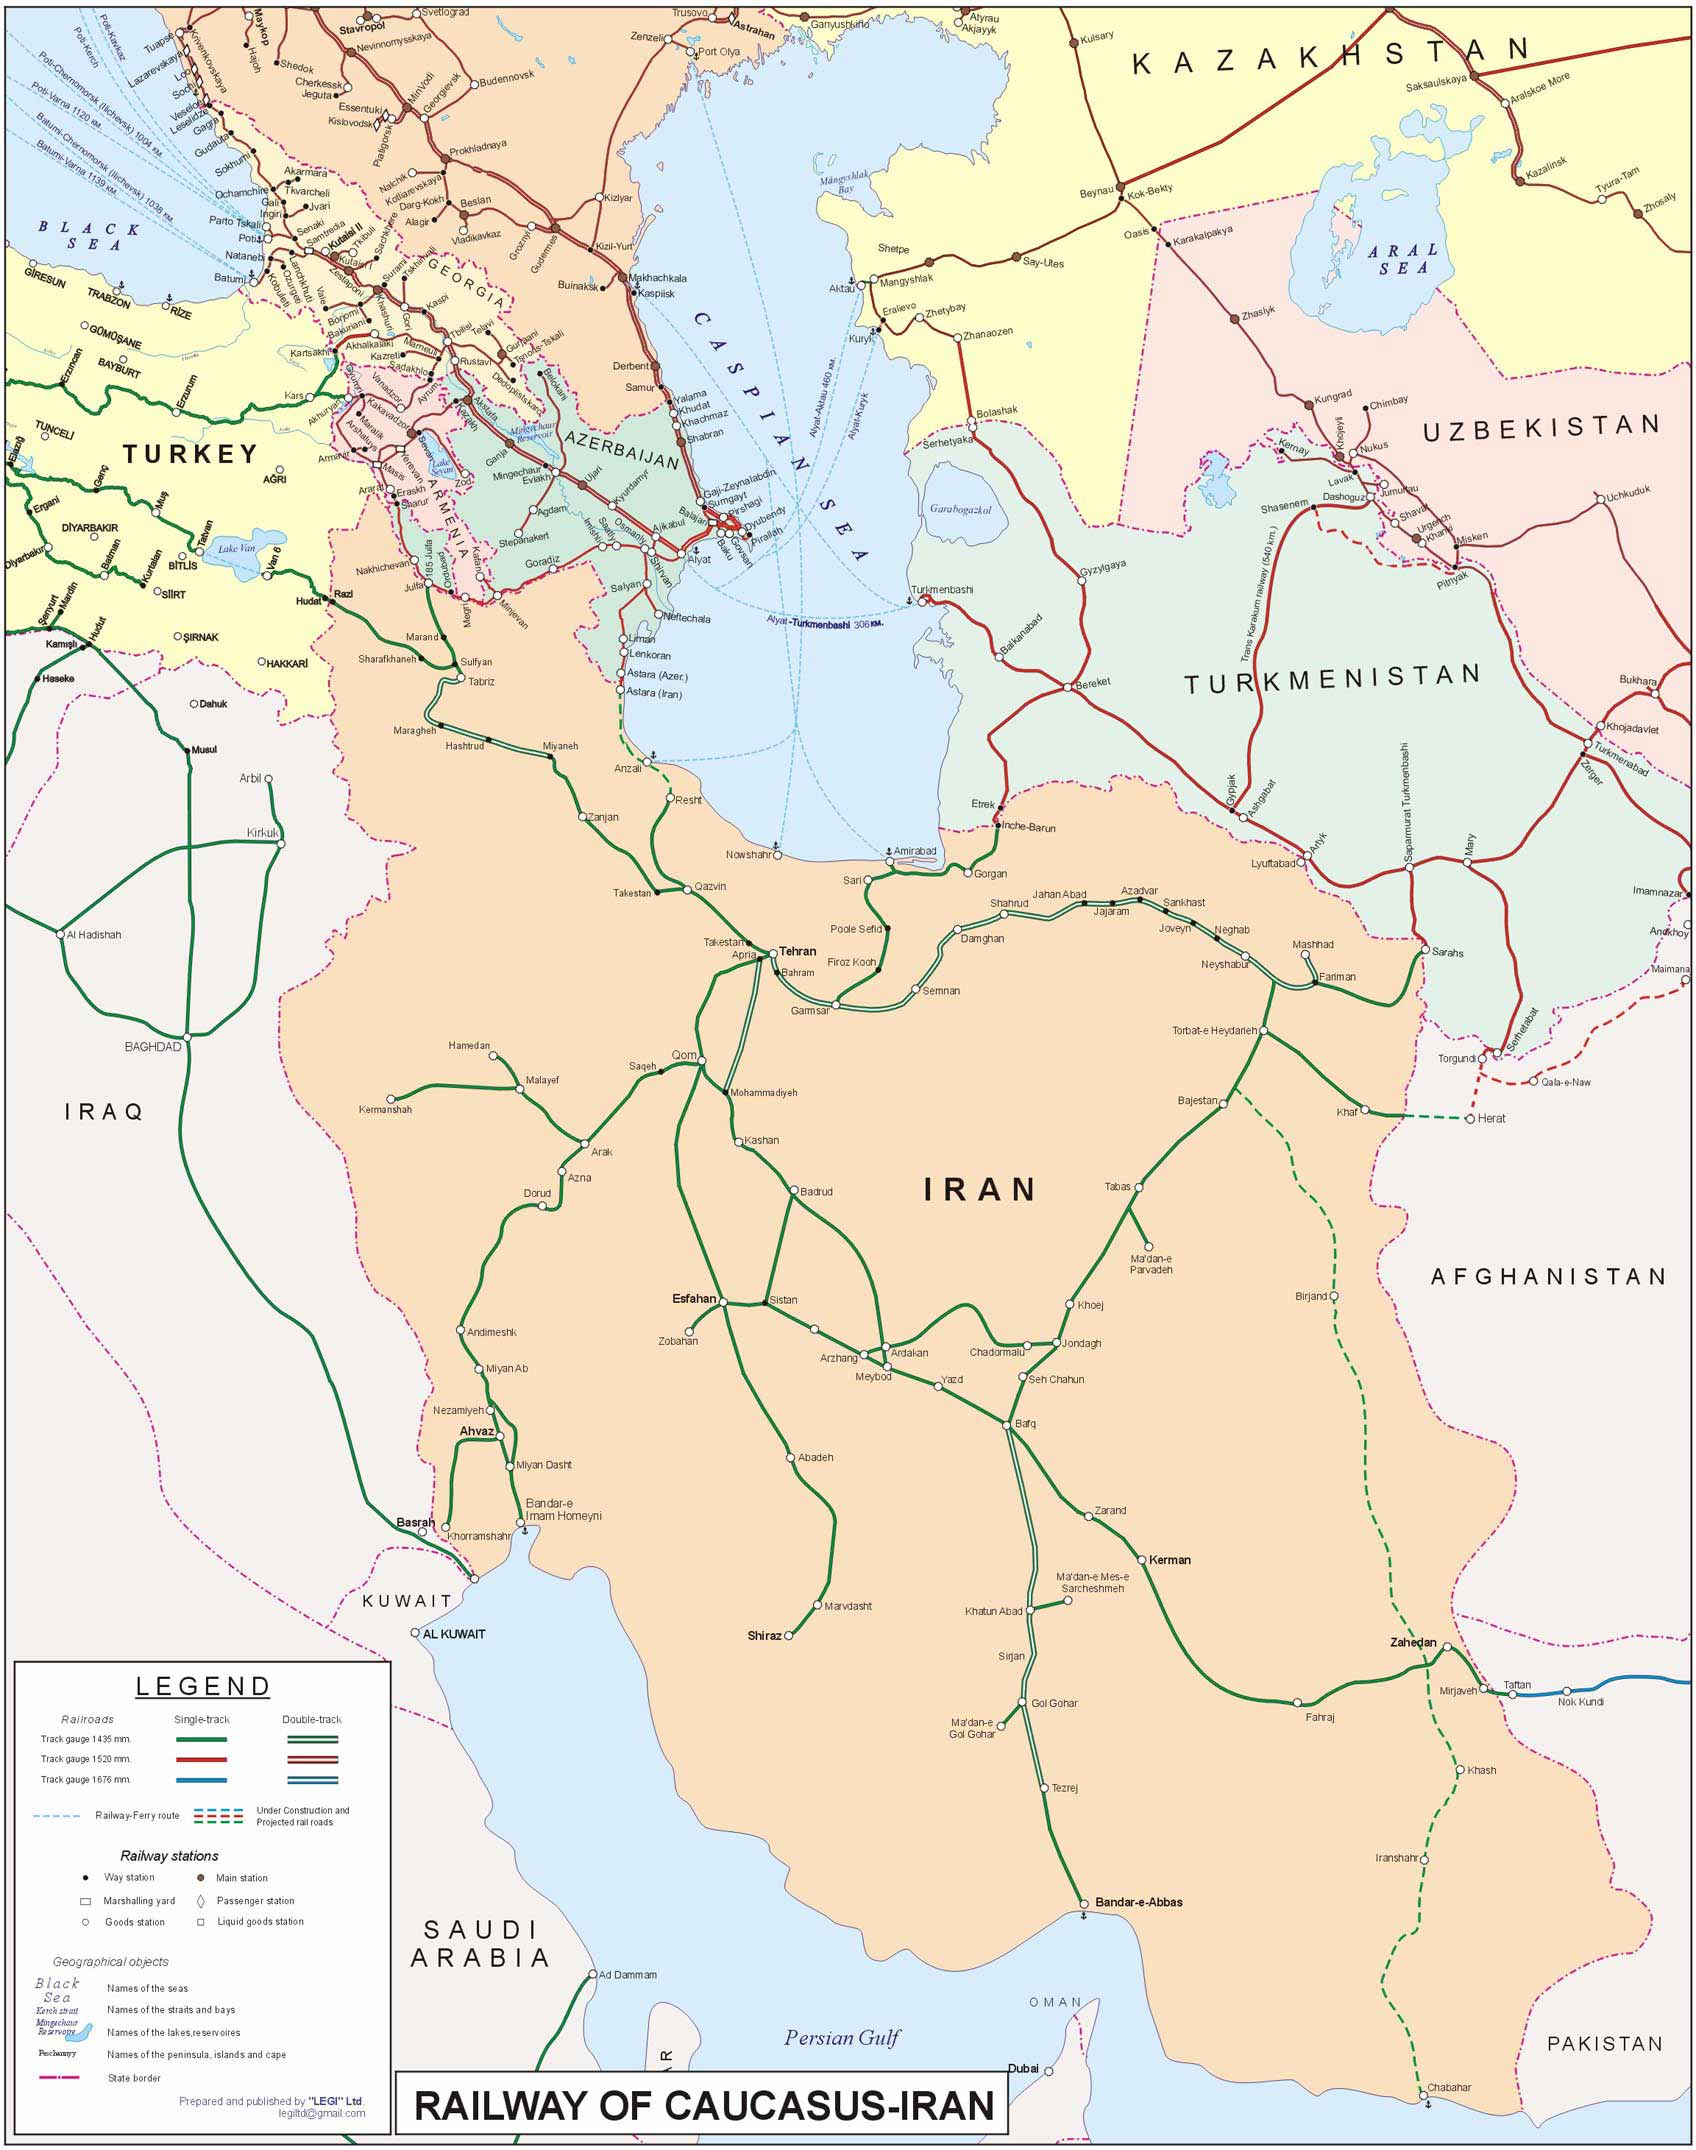 Railway map of Iran and Caucasus